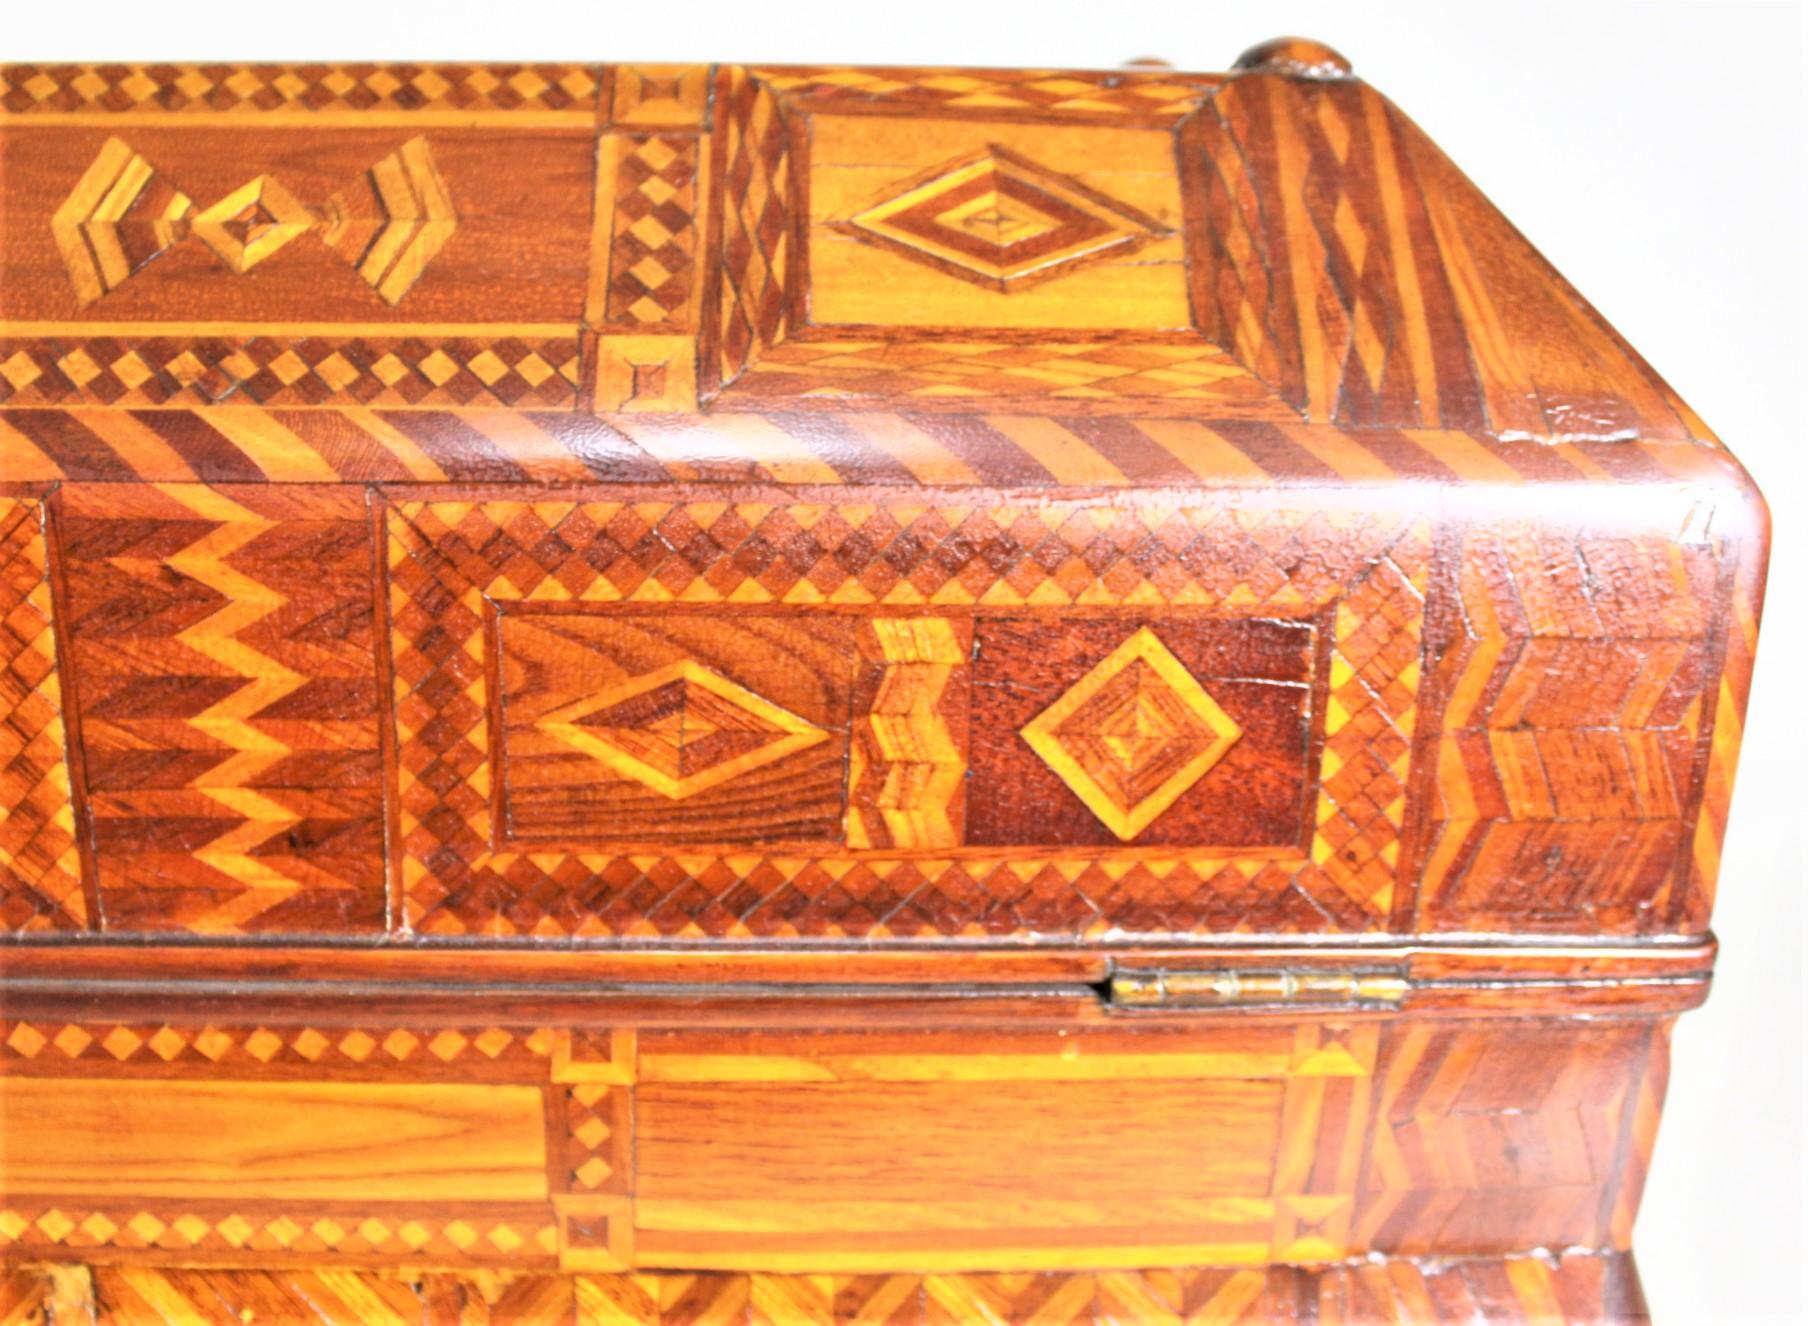 Superb Antique Folk Art Parquetry Casket Styled Writing Box or Lap Desk For Sale 10